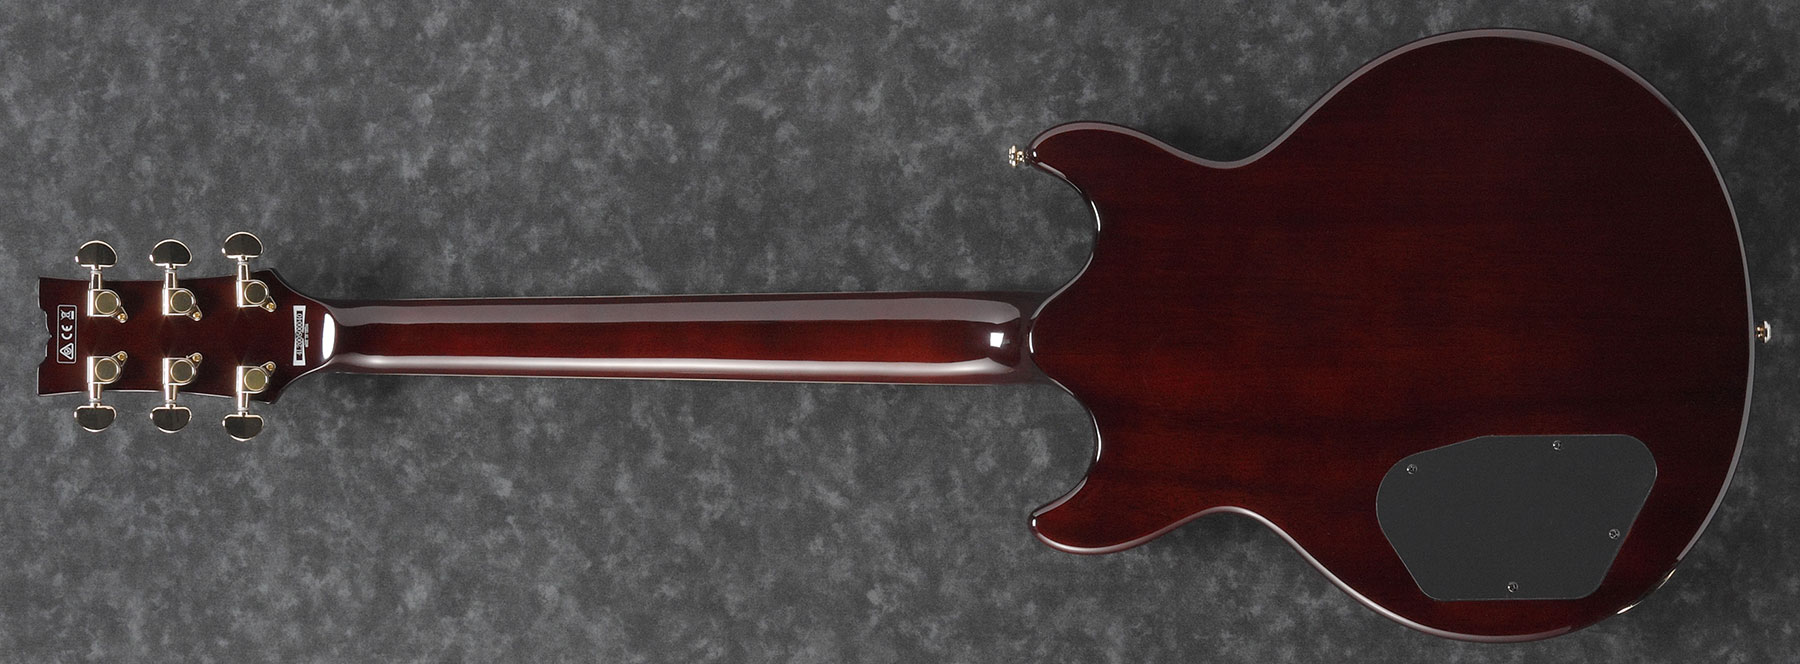 Ibanez Ar520hfm Vls Standard Hh Ht Jat - Violin Sunburst - Hollow bodytock elektrische gitaar - Variation 1